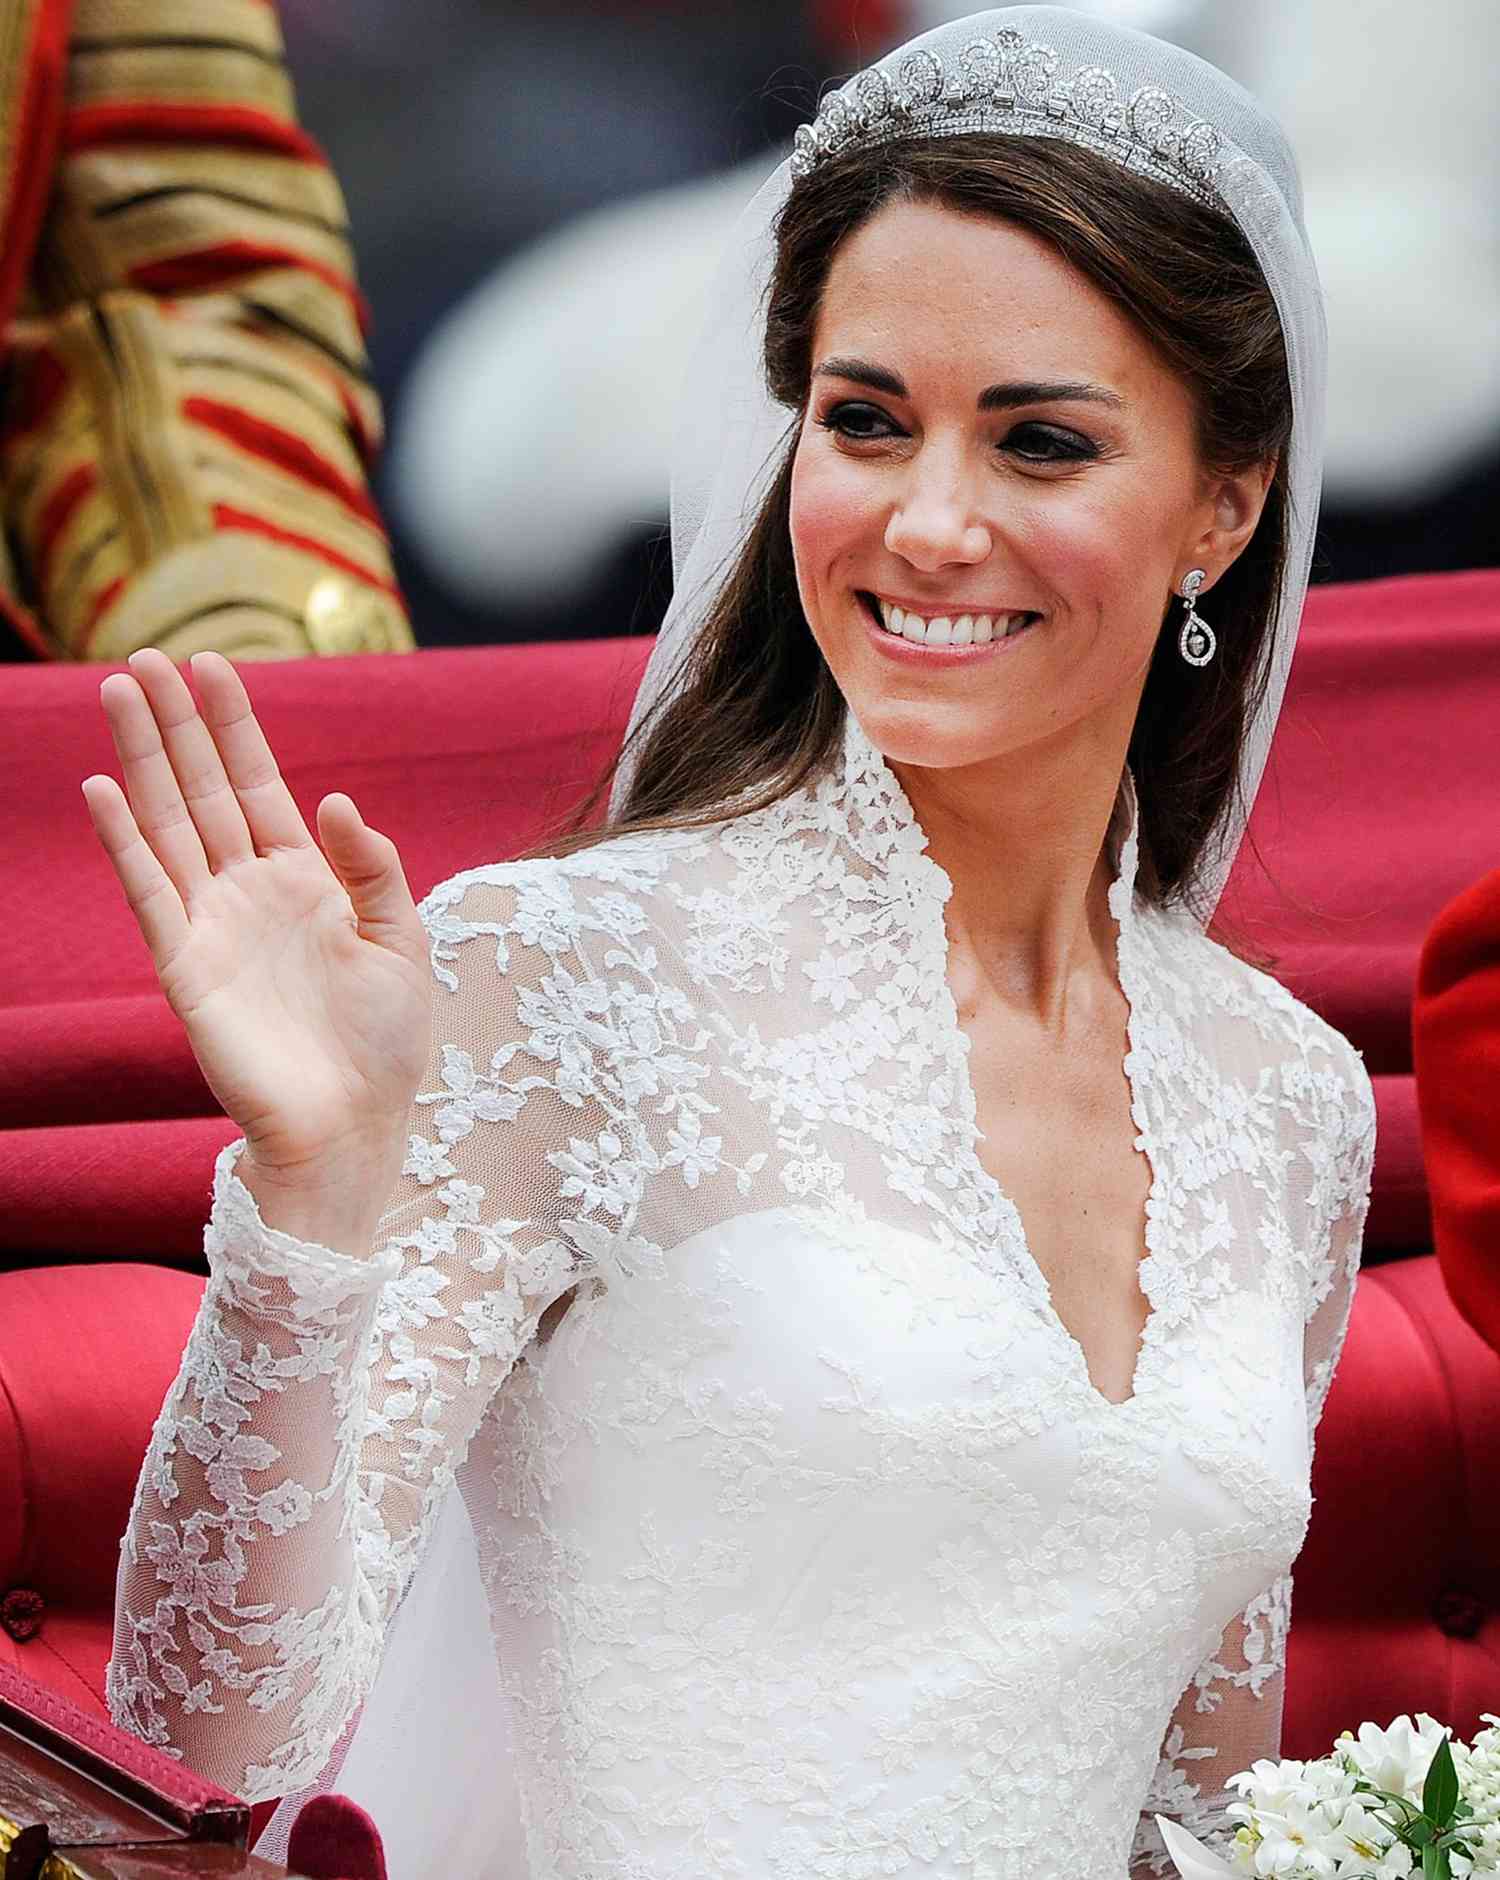 Kate Middleton Wedding Dress Announcement